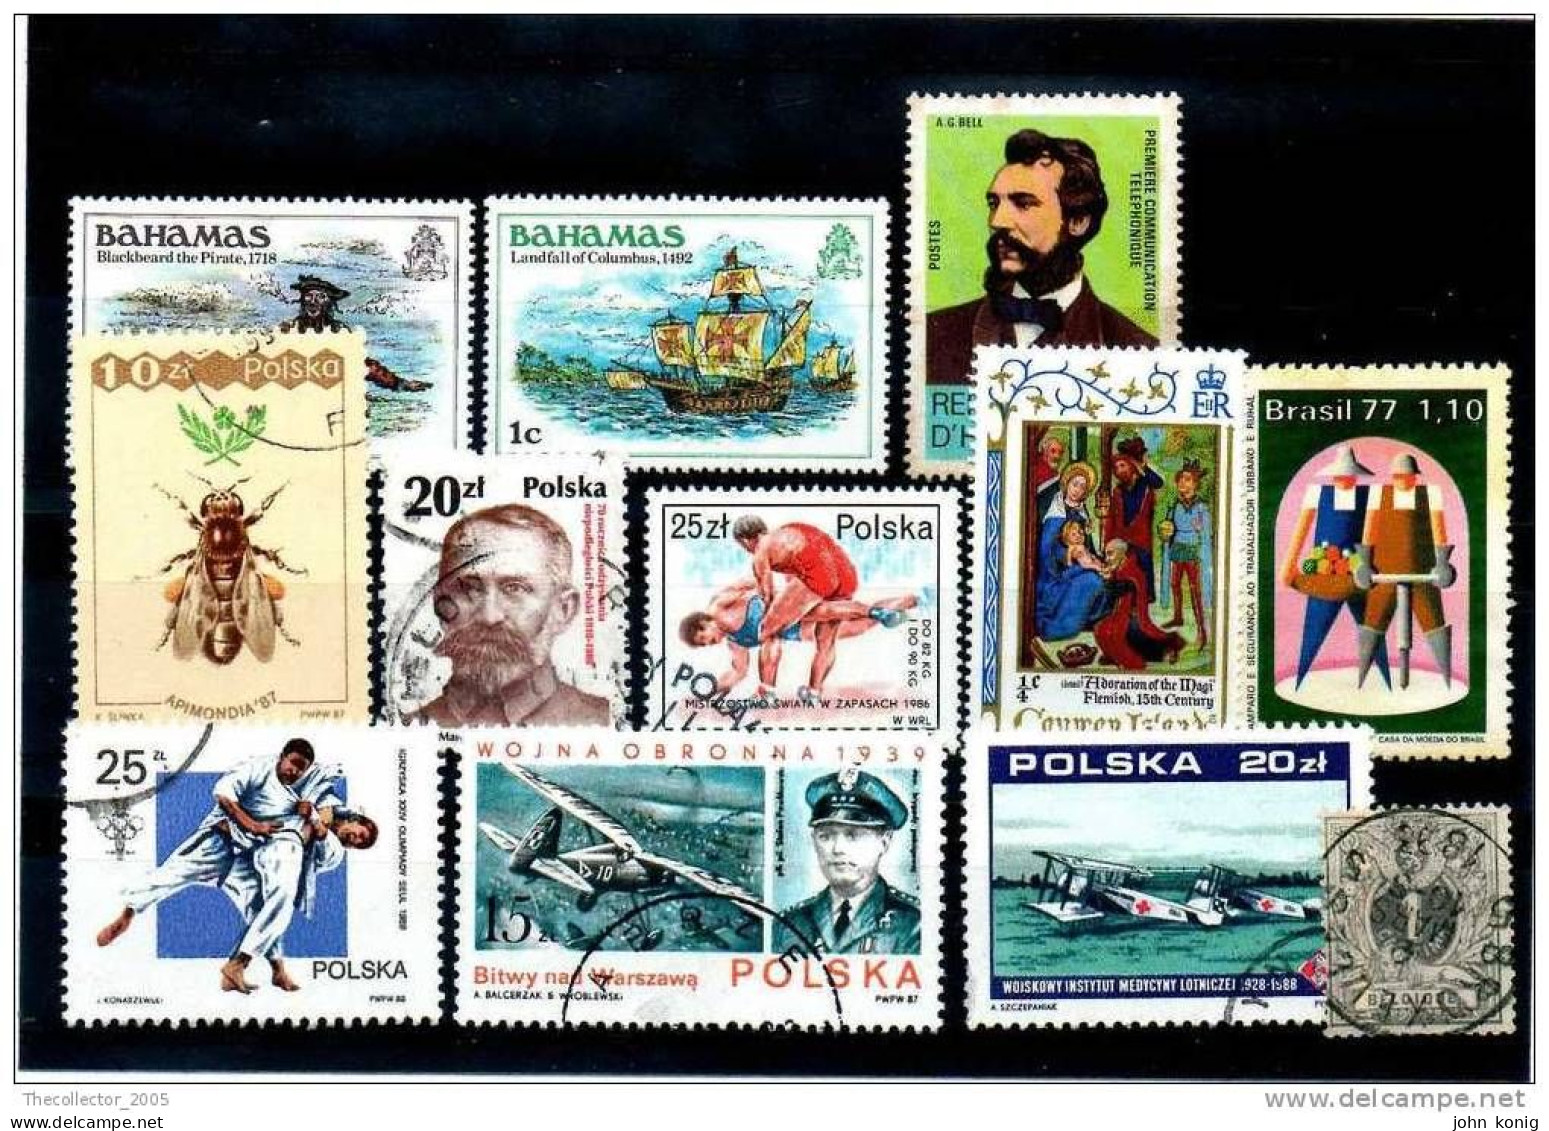 POLSKA BAHAMAS BRASIL - BRASILE POLONIA BAHAMAS - Lotto Francobolli Nuovi & Usati - Mixed Lot Of New & Used Stamps - Verzamelingen